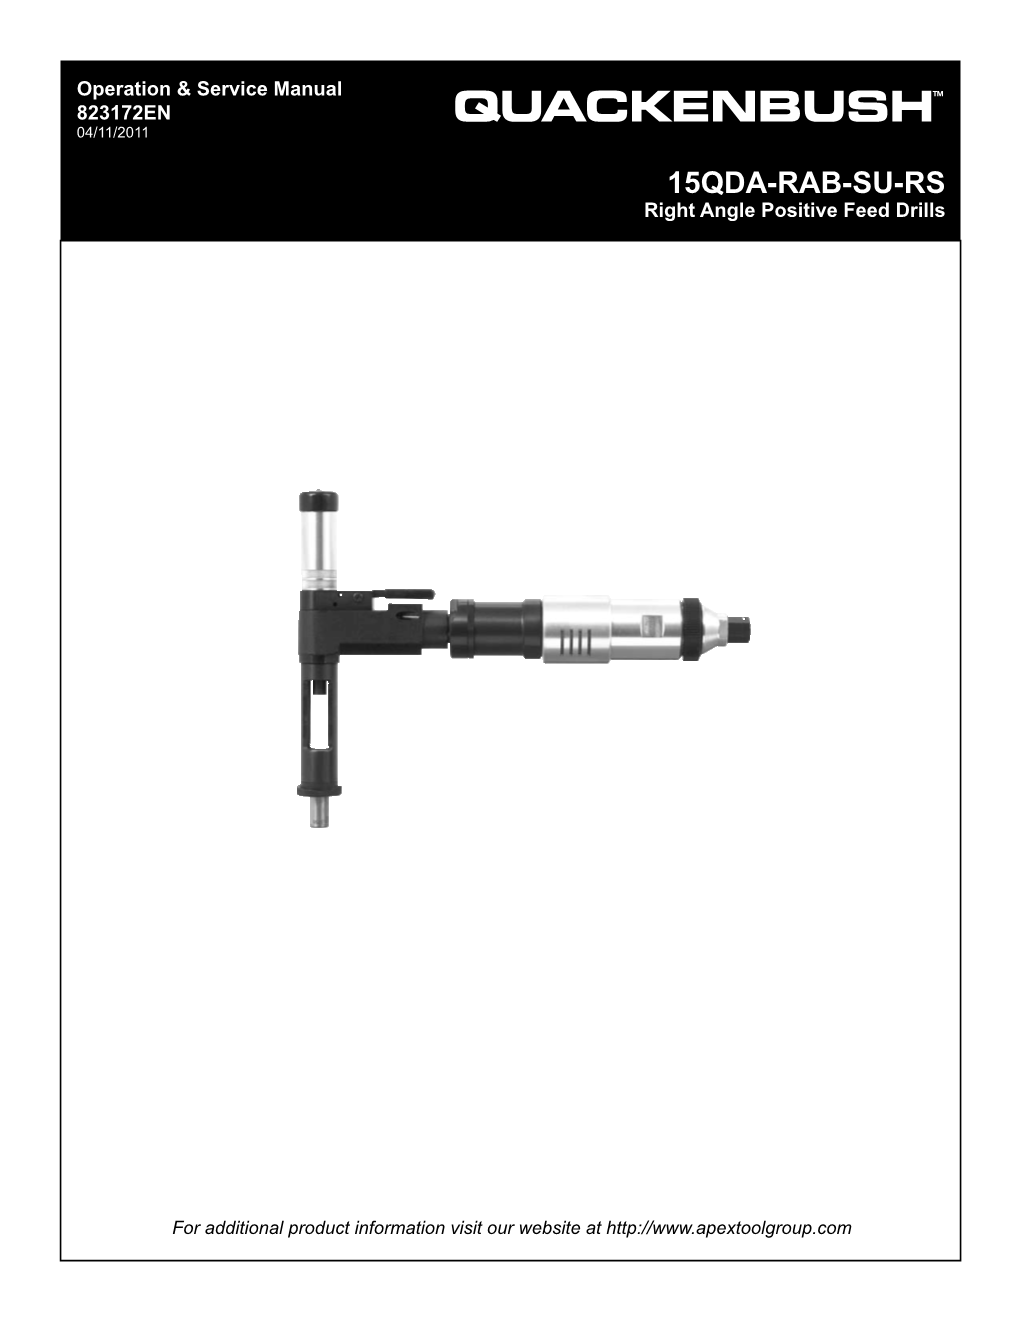 15QDA-RAB-SU-RS Right Angle Positive Feed Drills